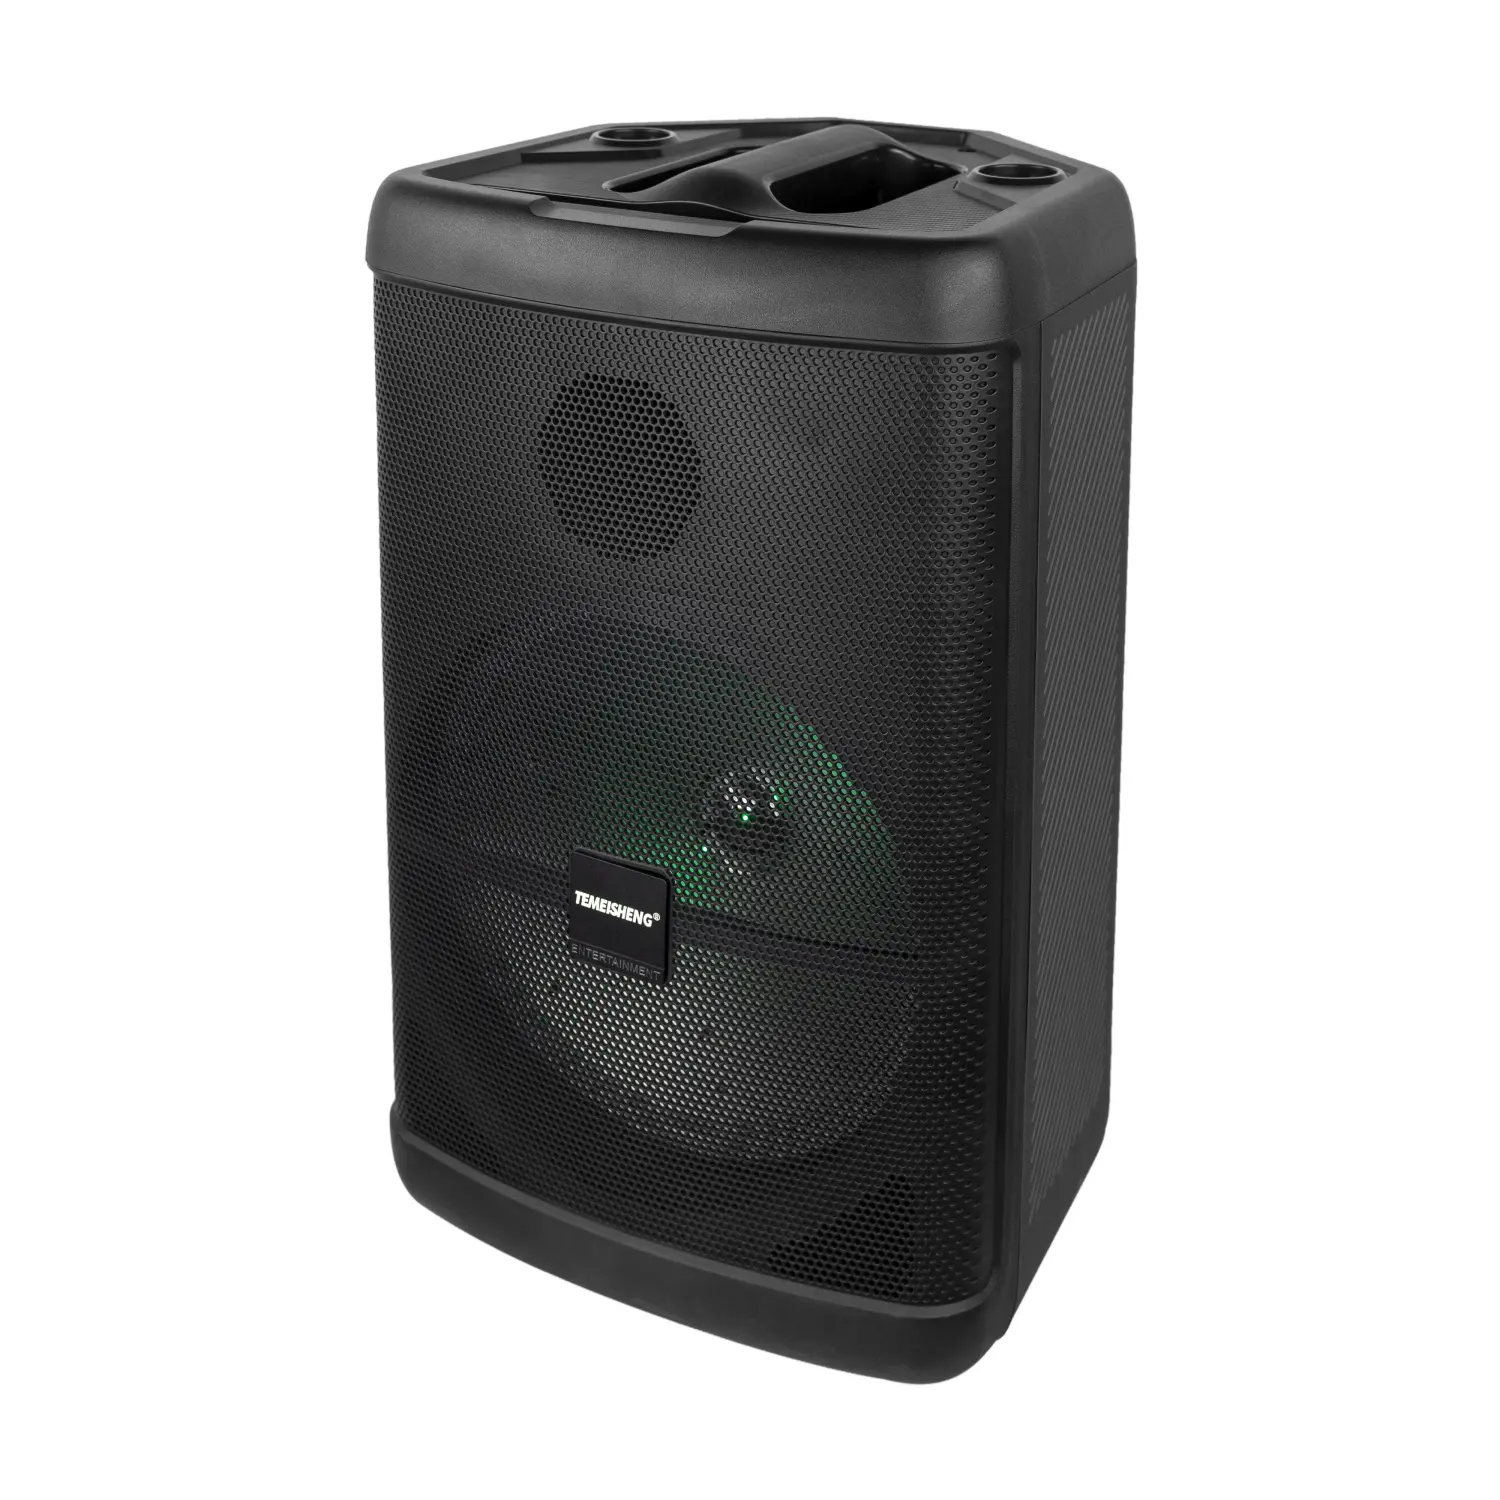 8-Inch 2-Way Portabel PA Speaker dengan Built-In Baterai Isi Ulang, 1 Kabel Mic, Bluetooth, USB, SD Card Reader, Lampu LED